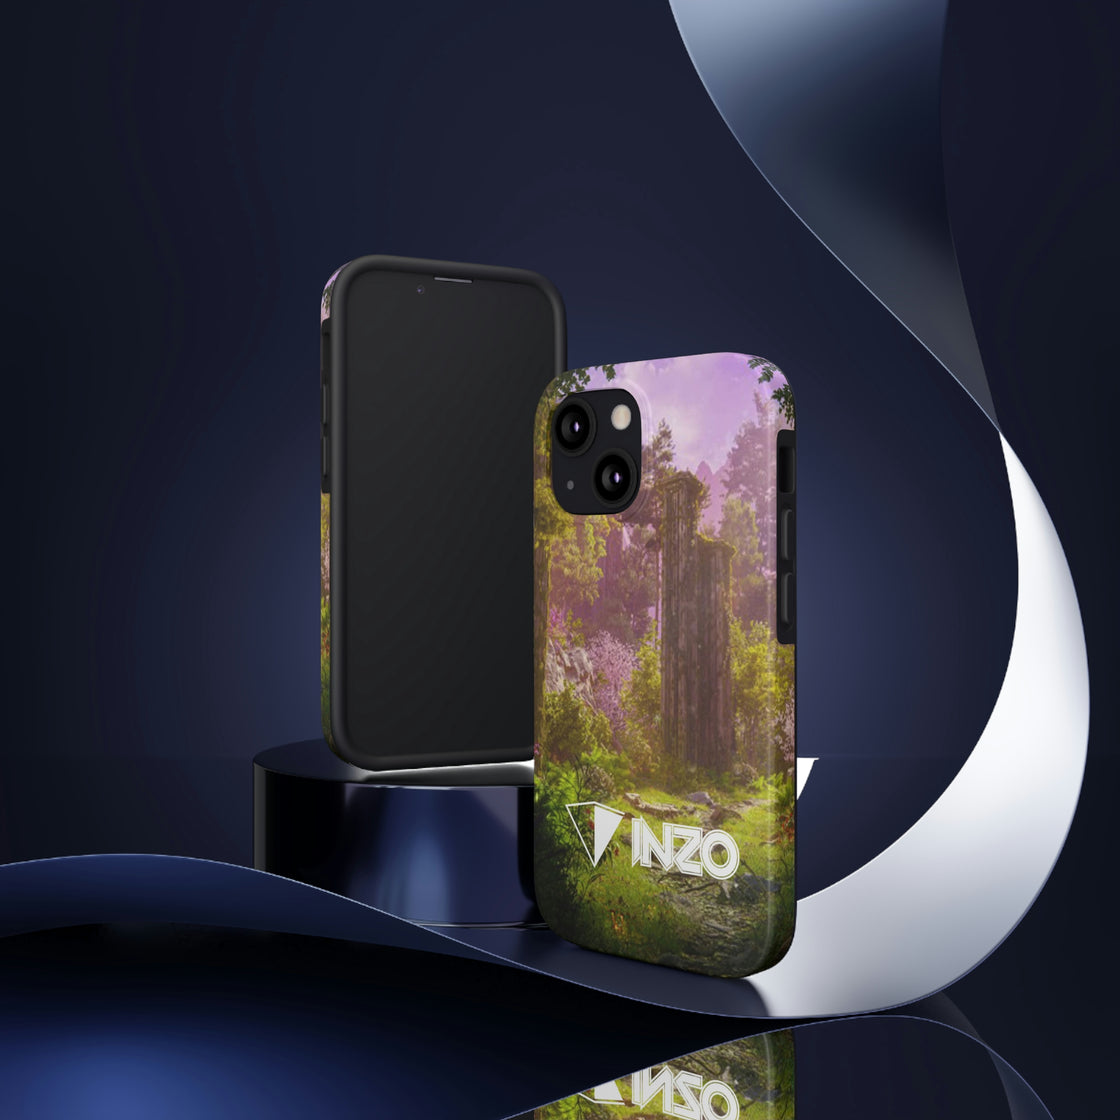 Inzo Tough Phone Cases, Case-Mate IPhone